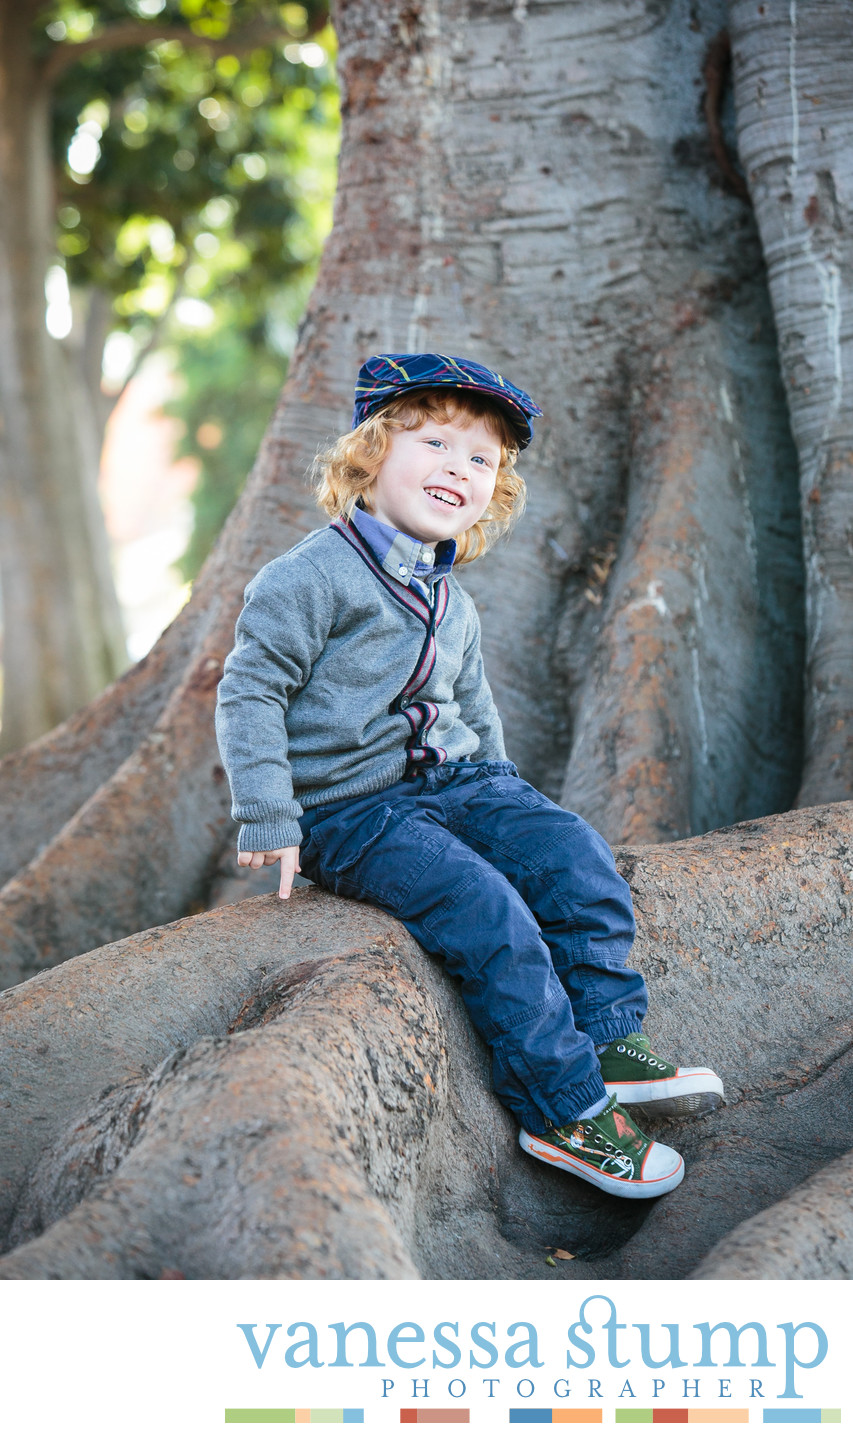 Portrait of cute young boy in newsboy cap sitting on a tree